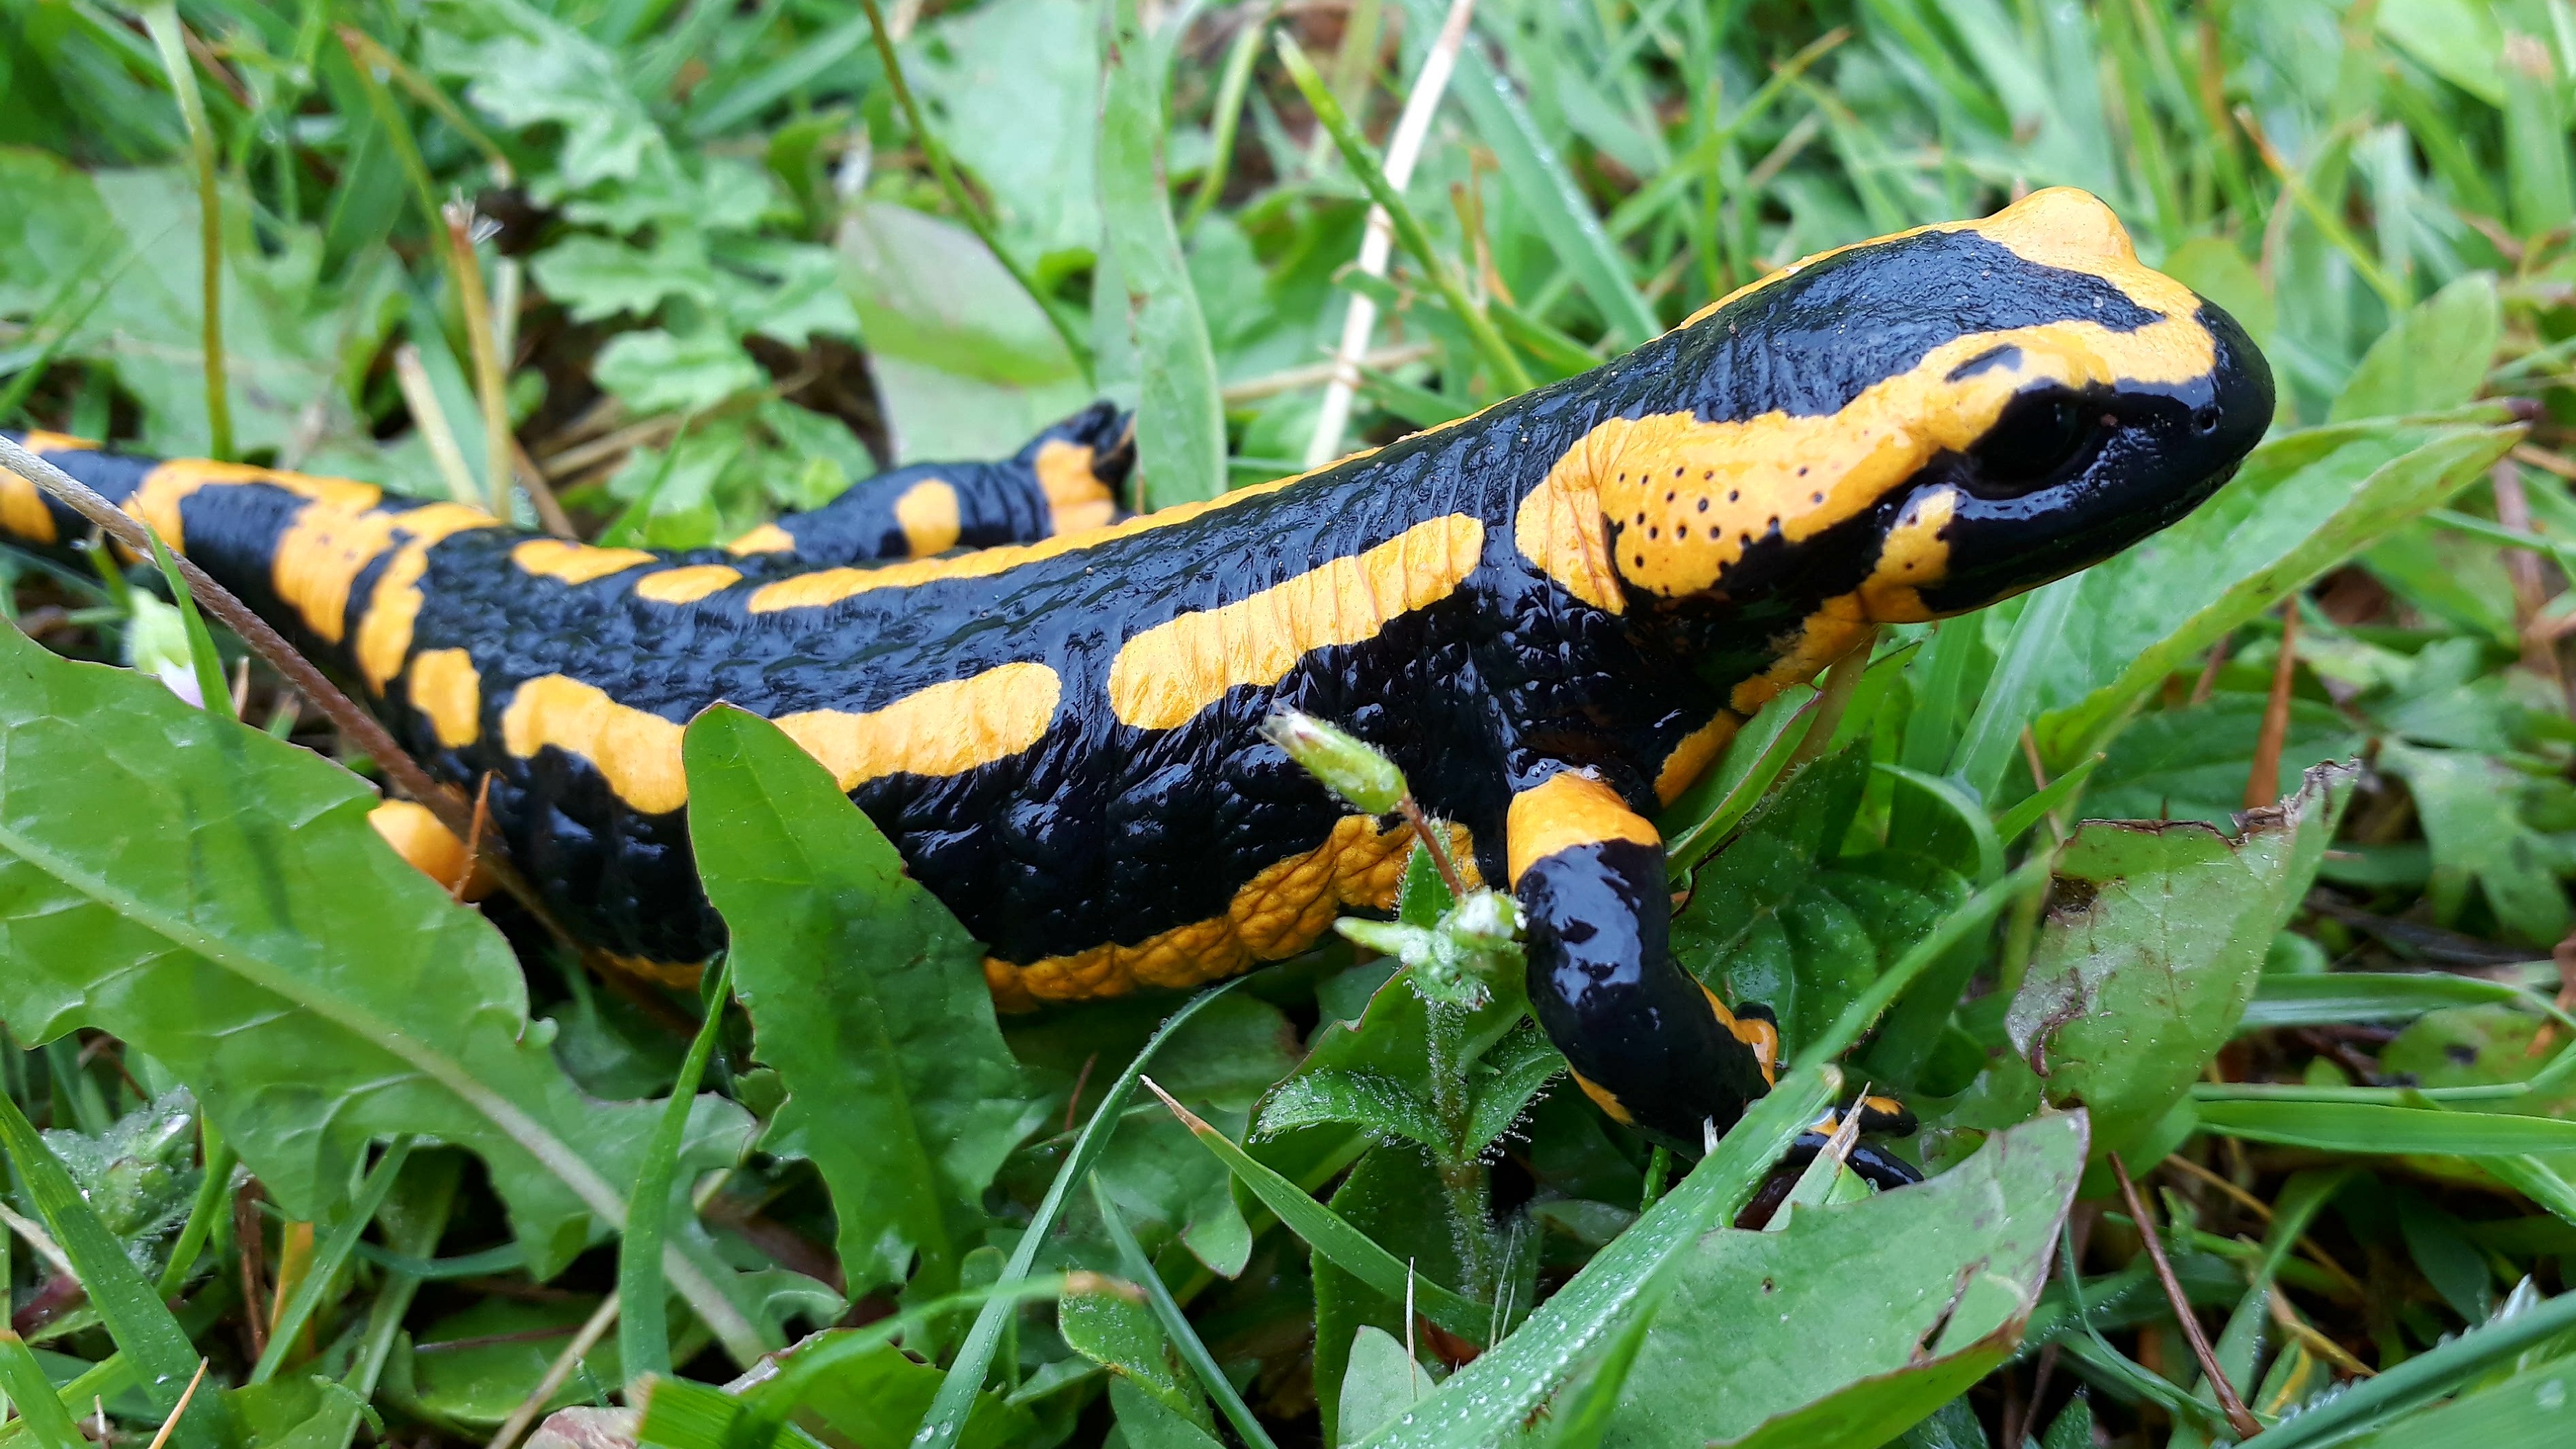 Zastaki.com - Красивая саламандра в зеленой траве